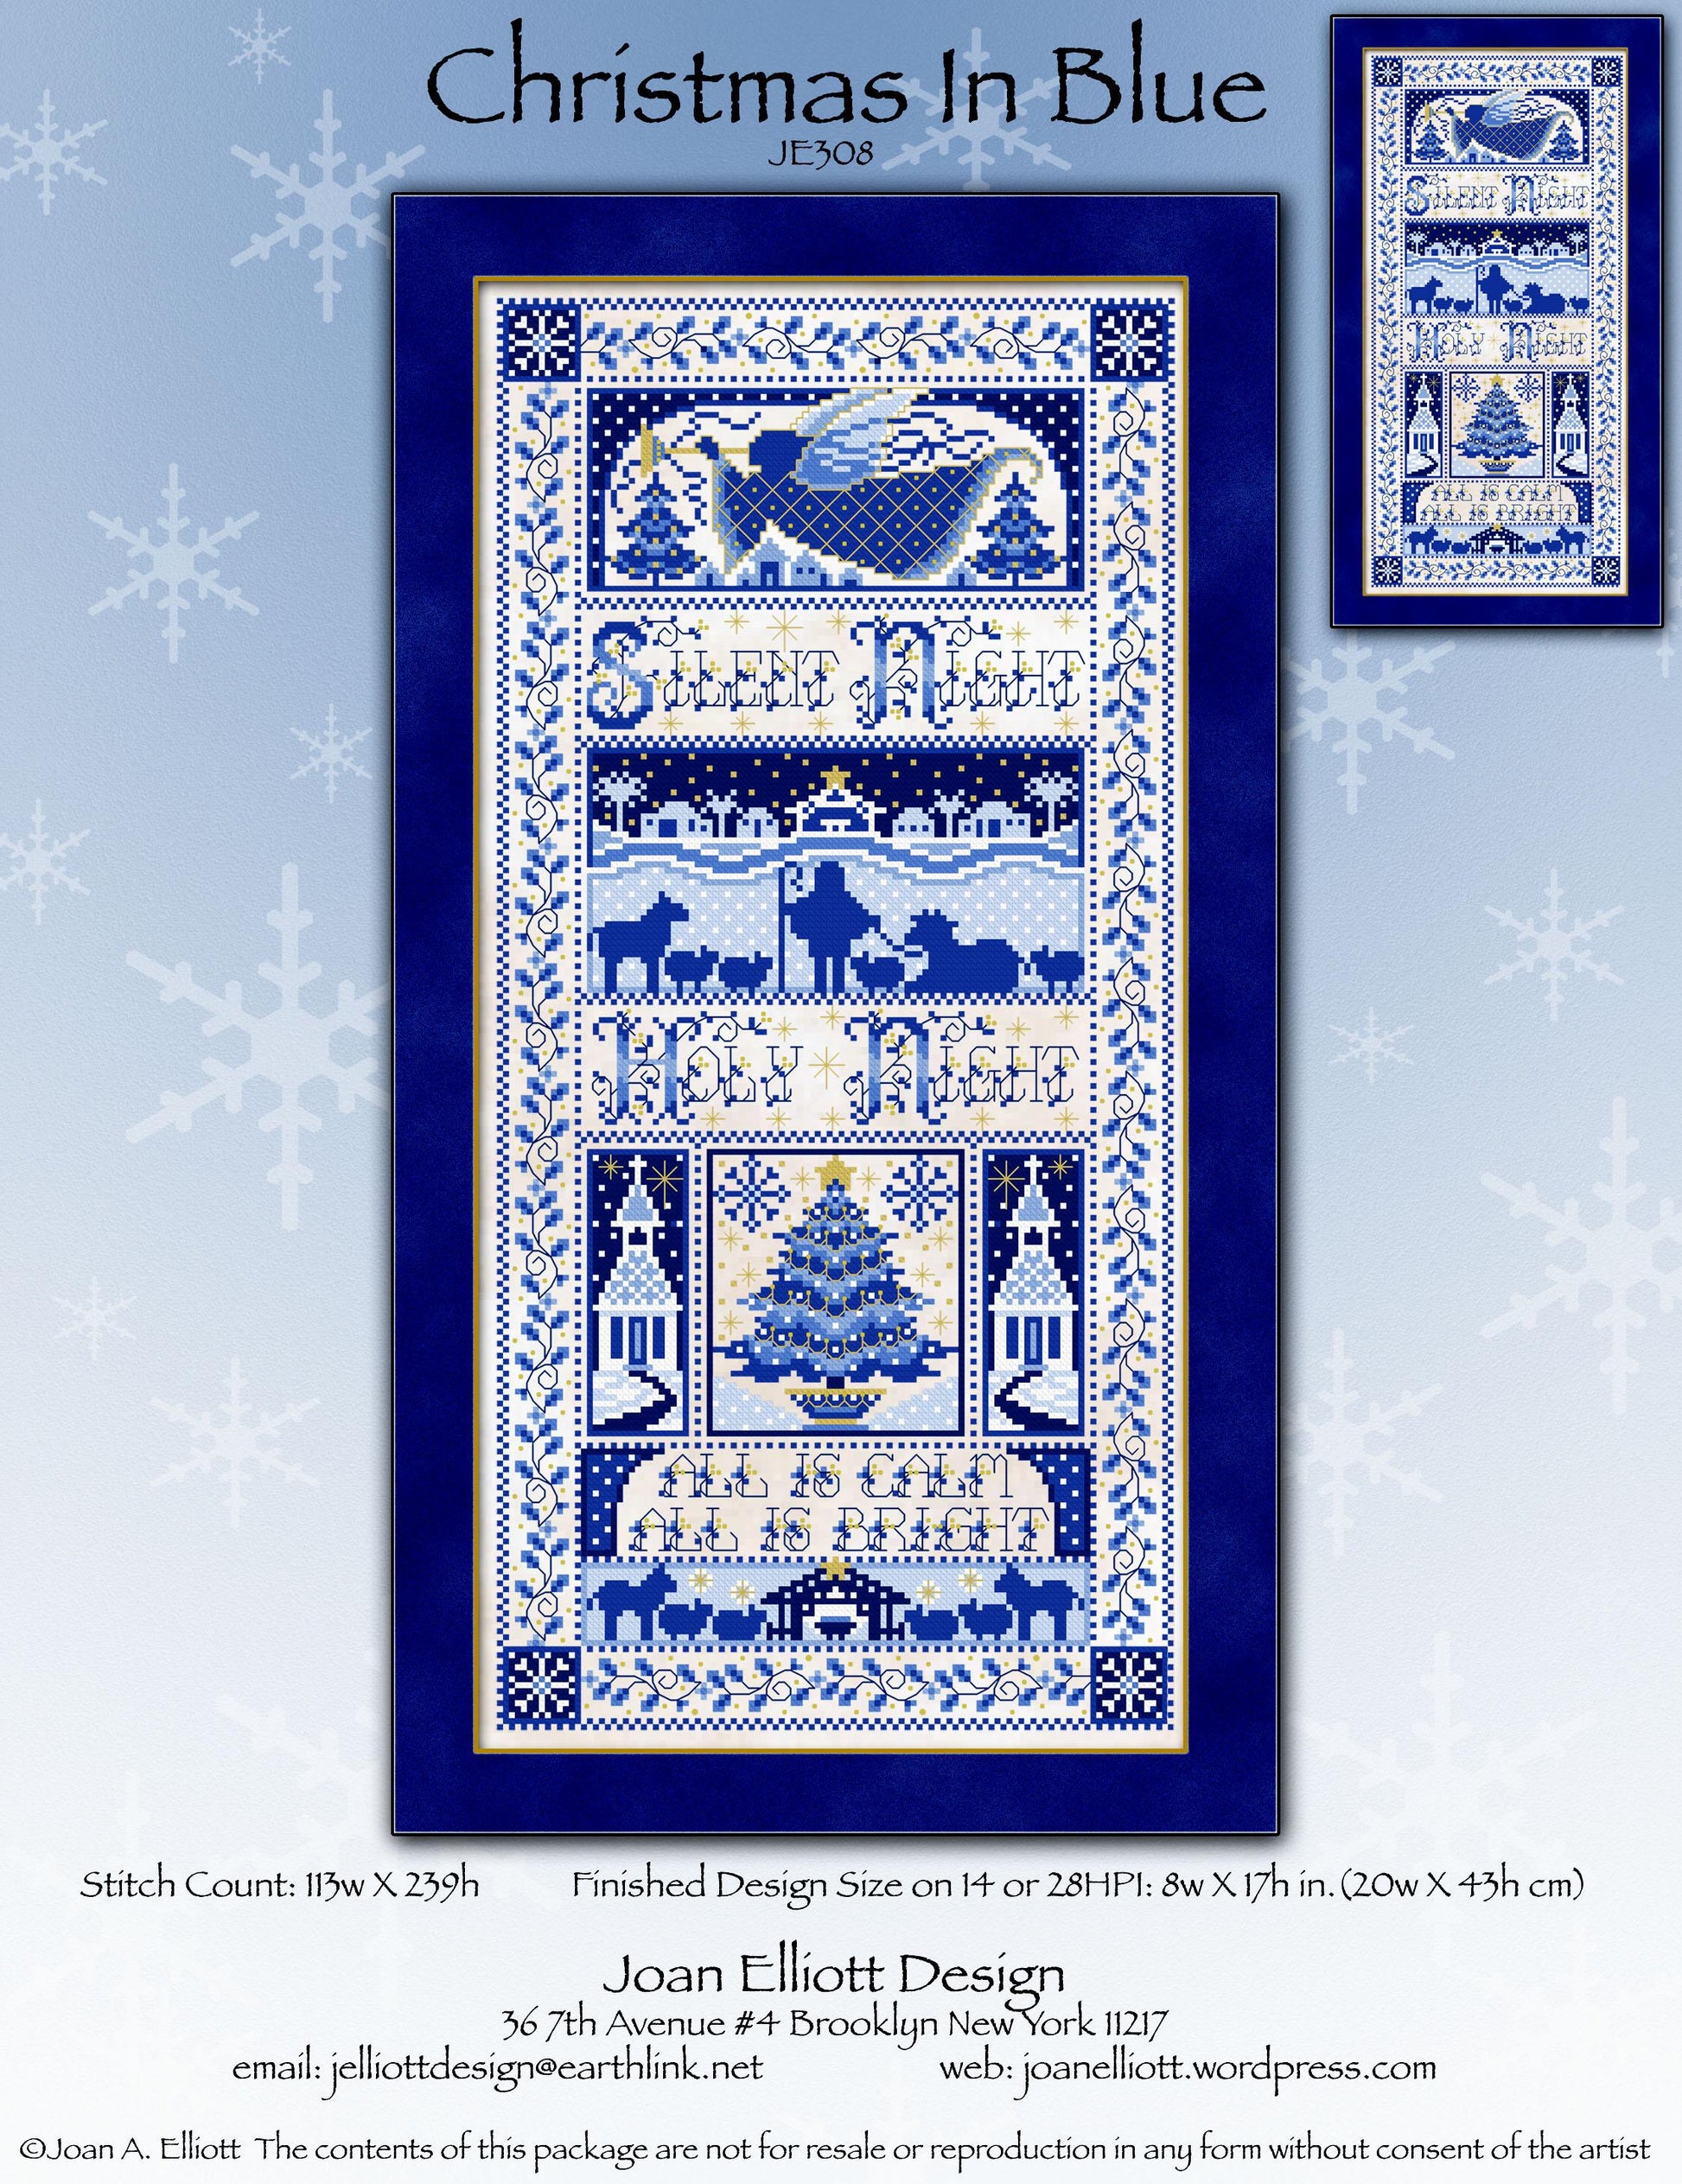 Christmas in Blue by Joan Elliot Design - Cross Stitch Pattern, Needlecraft Patterns, The Crafty Grimalkin - A Cross Stitch Store